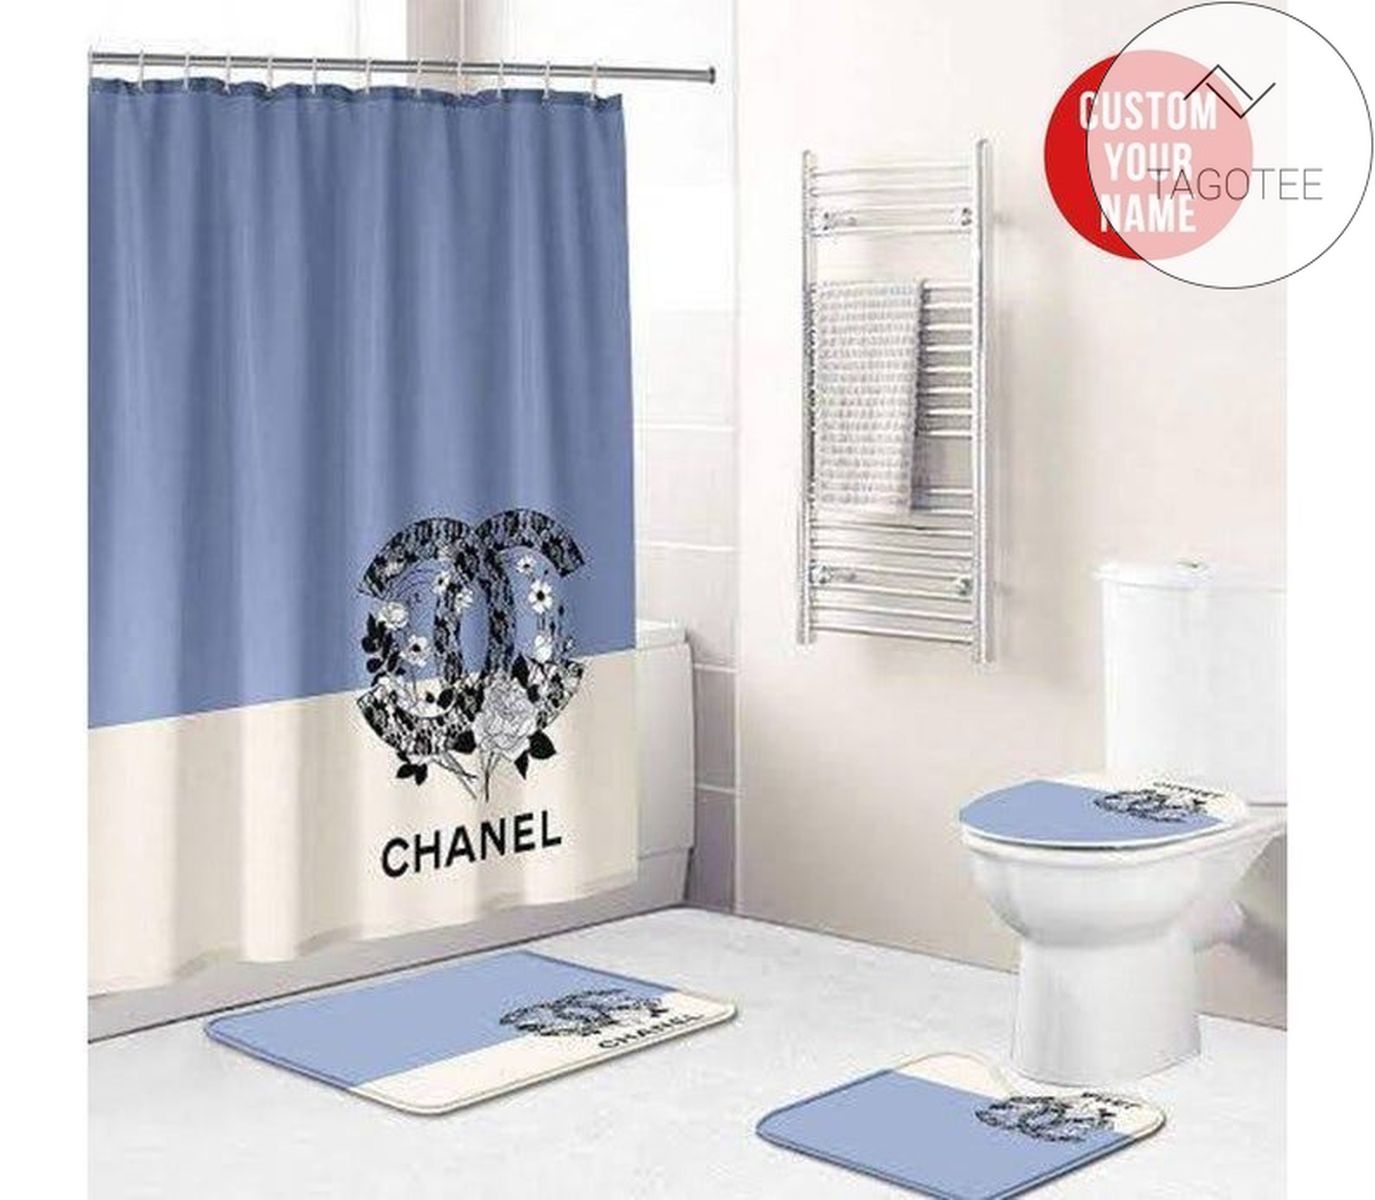 Chanel Type 15 Shower Curtain Waterproof Luxury Bathroom Mat Set Luxury Brand Shower Curtain Luxury Window Curtains